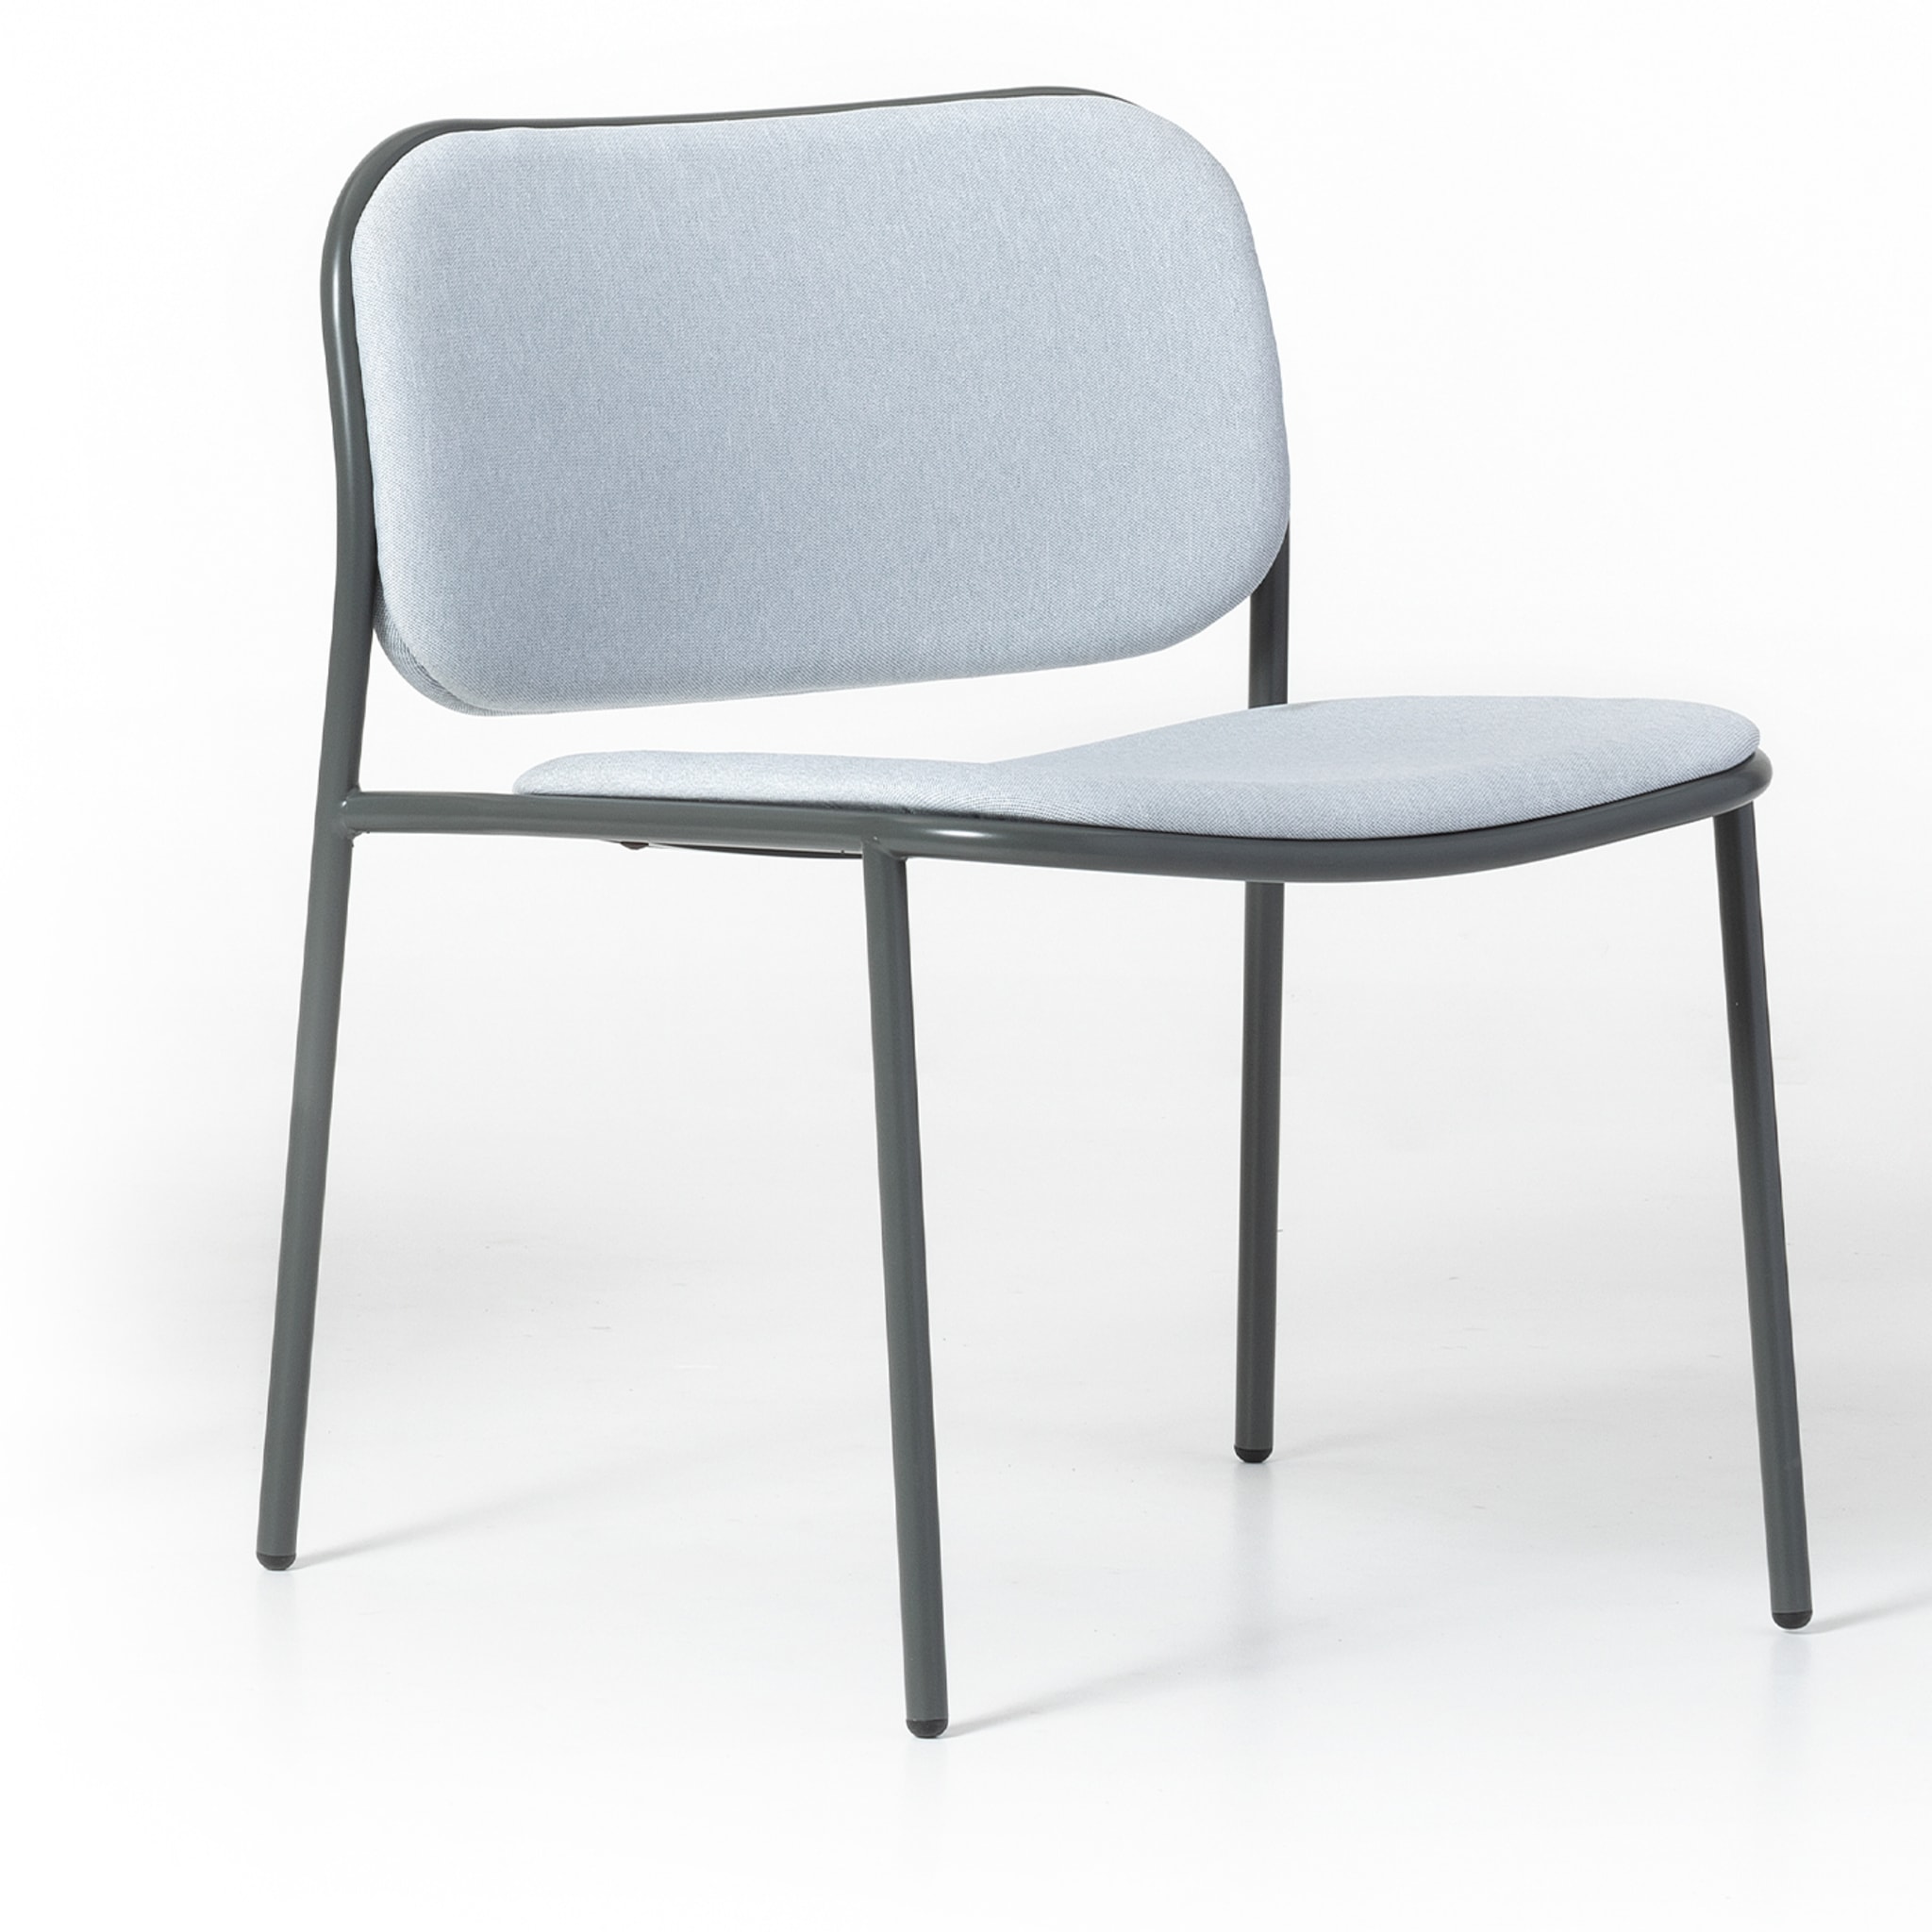 0182-IM Metis Gray Chair by Studio Gabbertas - Alternative view 1